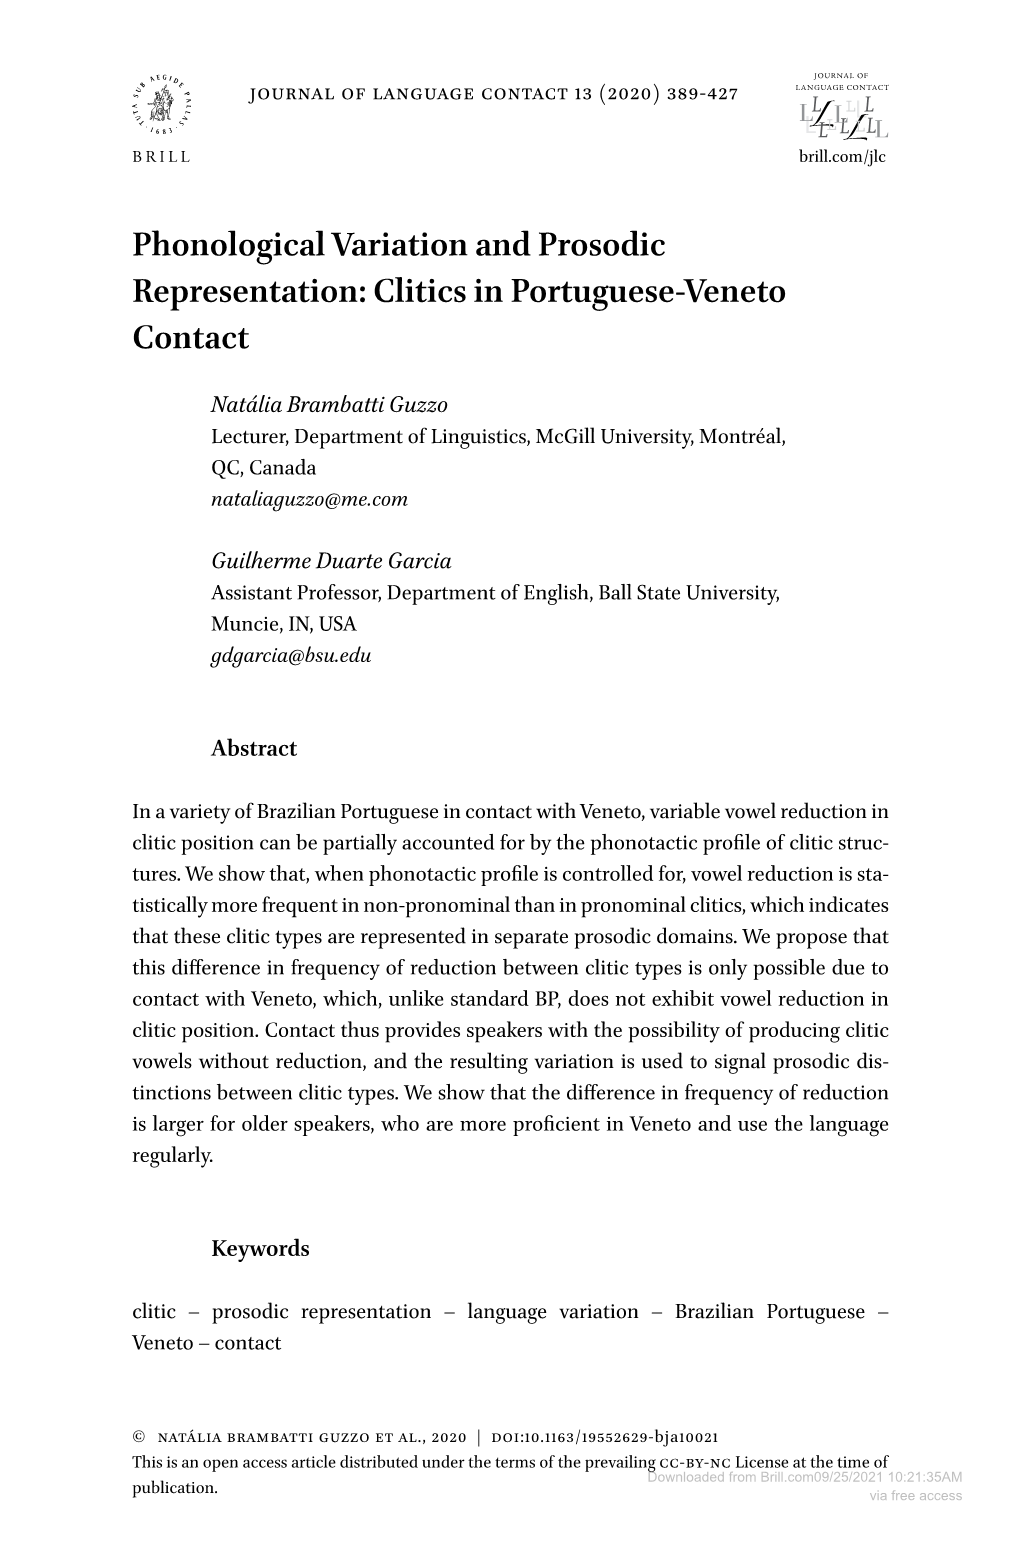 Phonological Variation and Prosodic Representation: Clitics in Portuguese-Veneto Contact